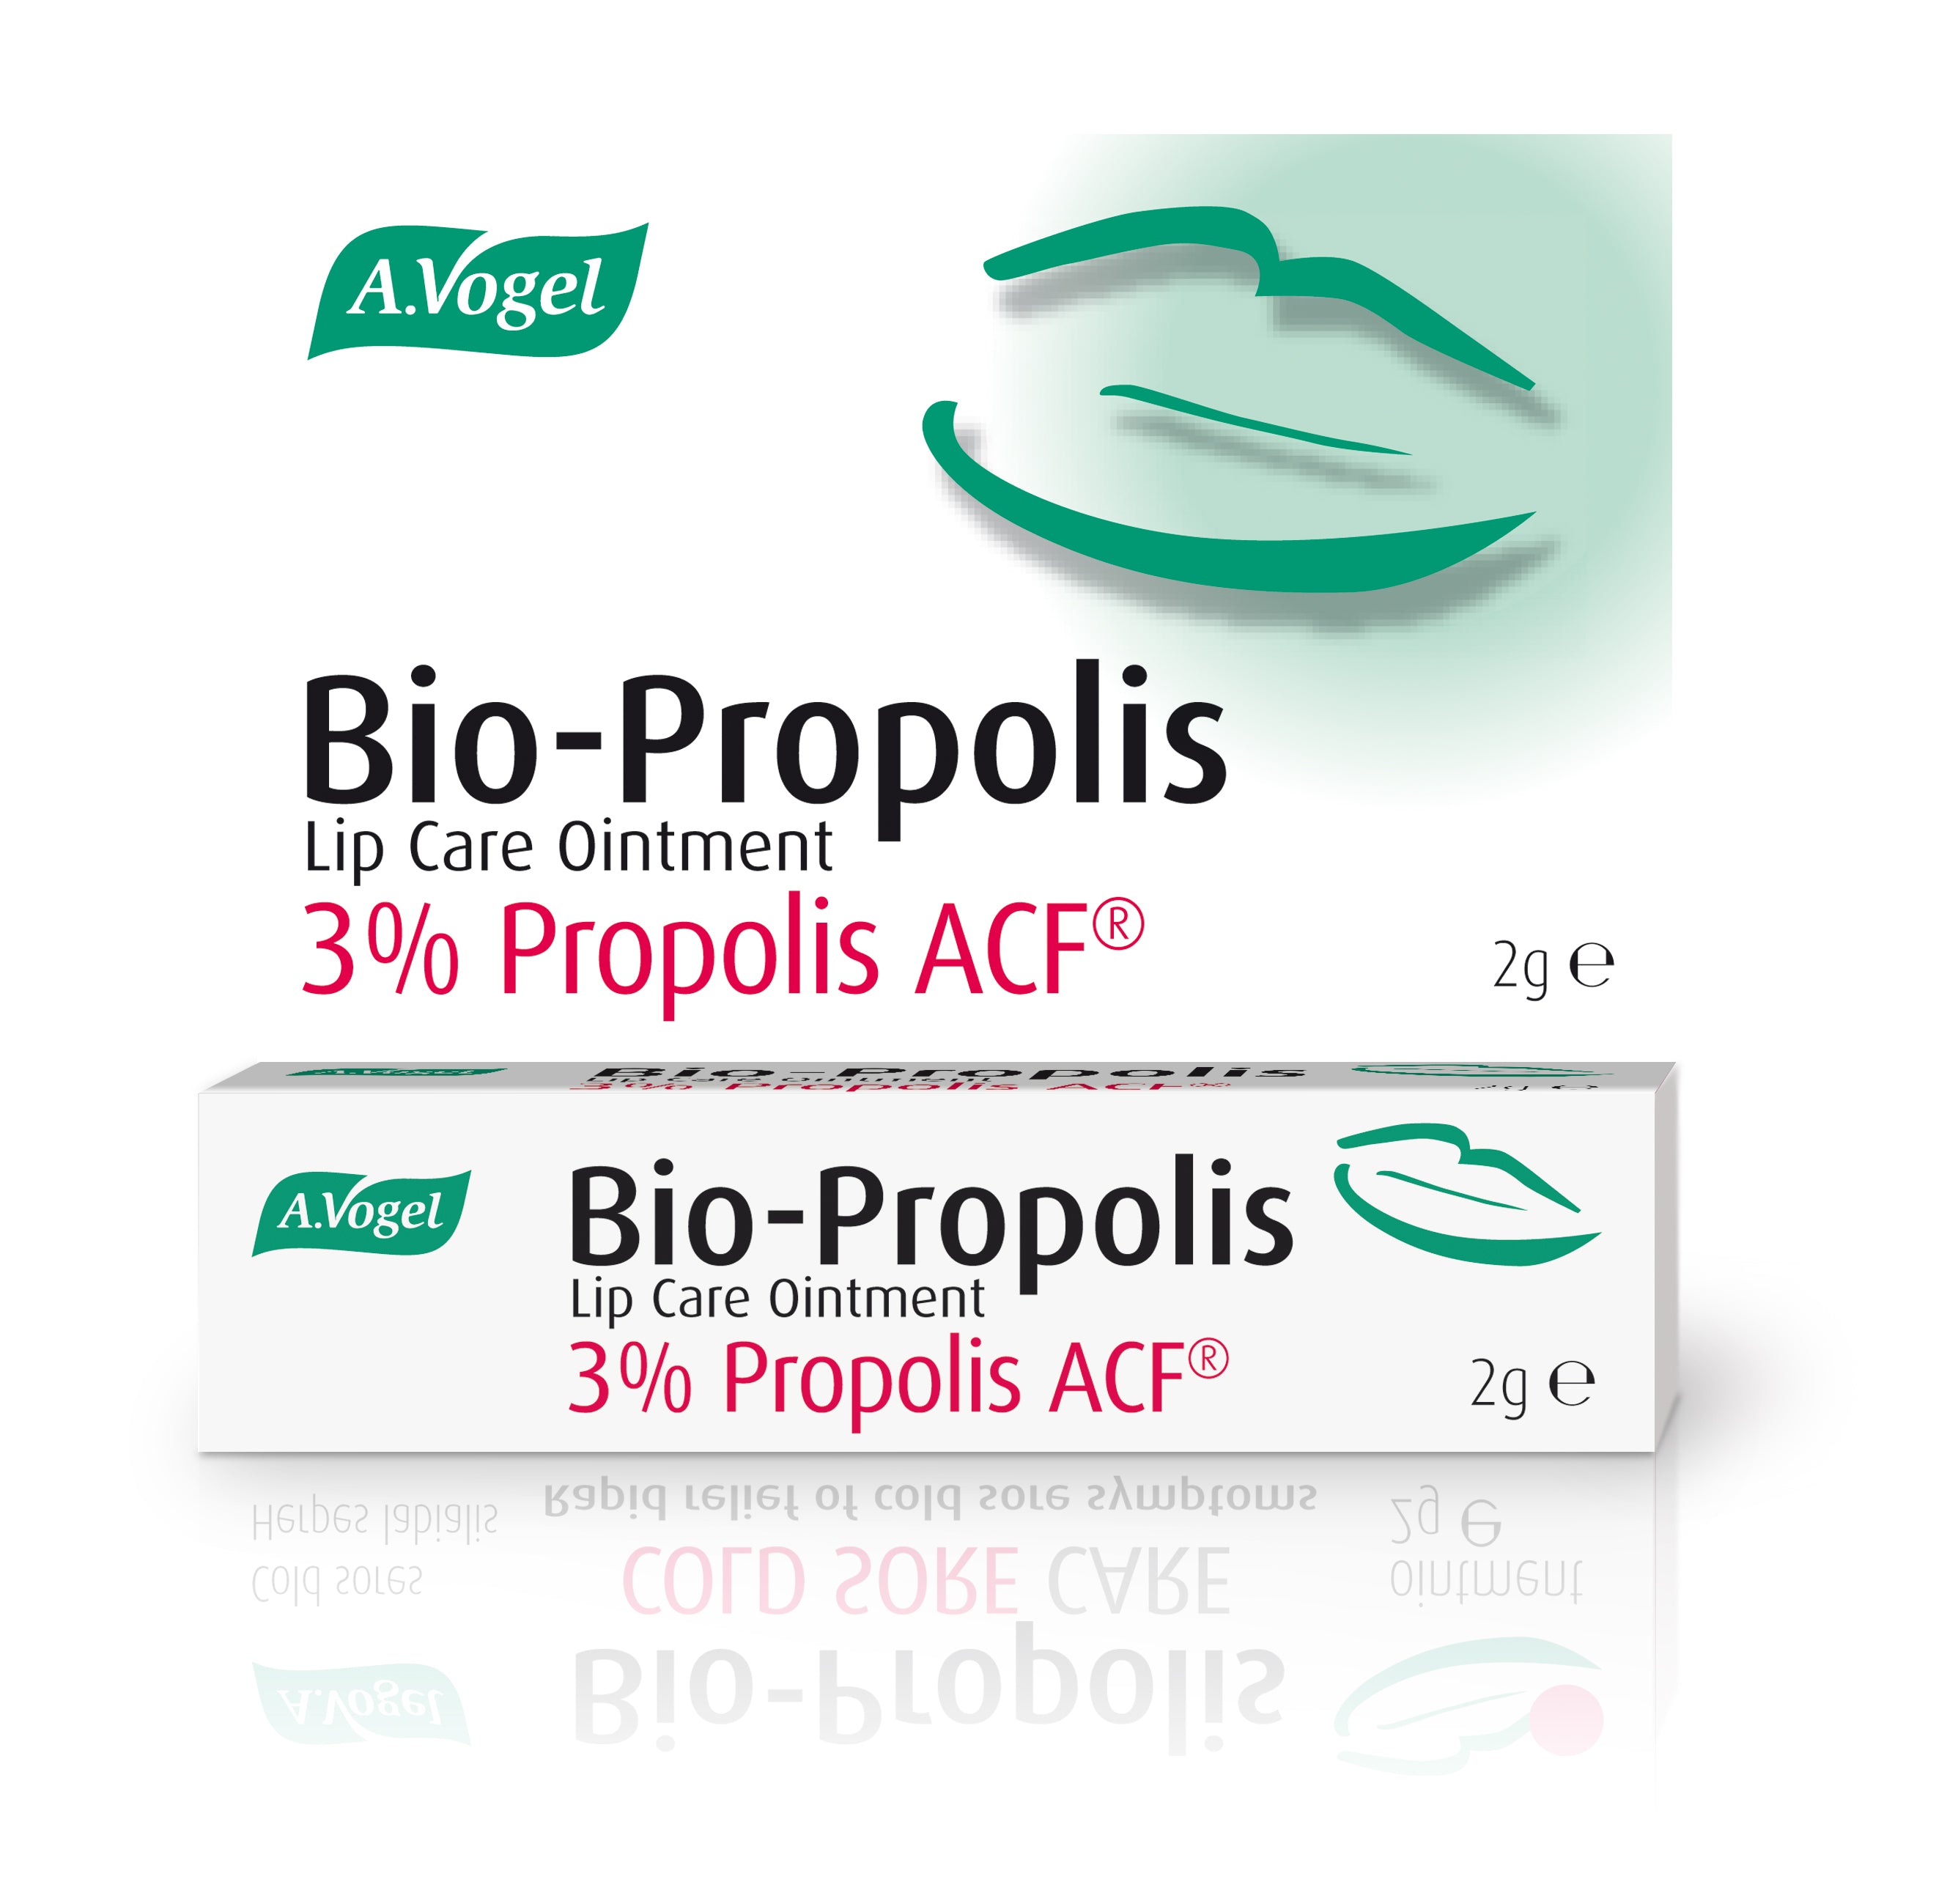 A Vogel (BioForce) Bio-Propolis Lip Care Ointment (Formerly Cold Sore Care) 2g